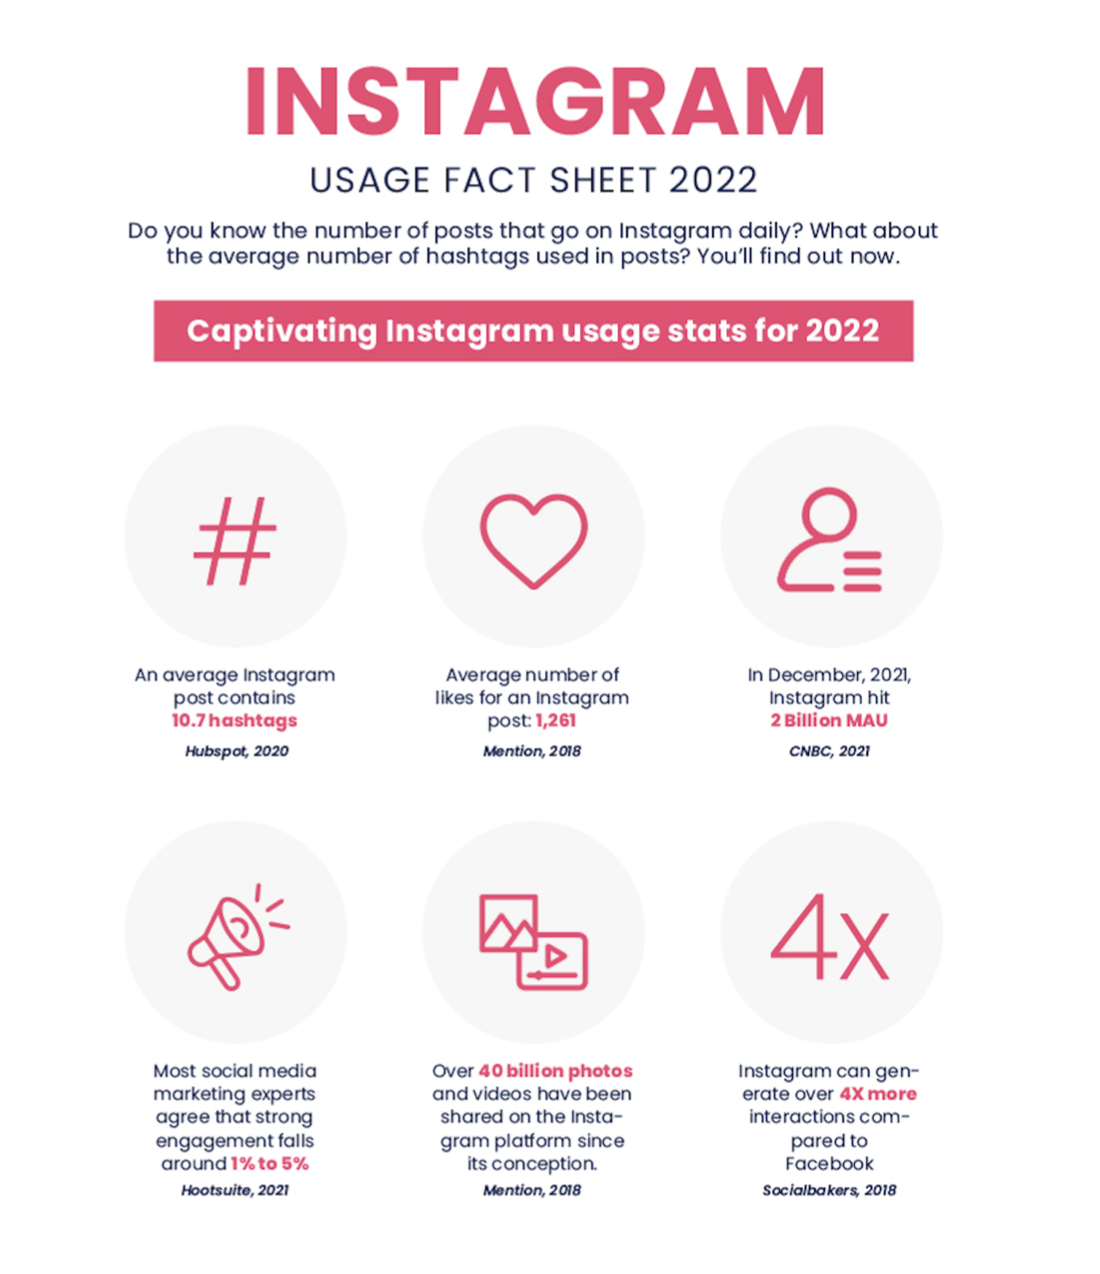 instagram usage fact